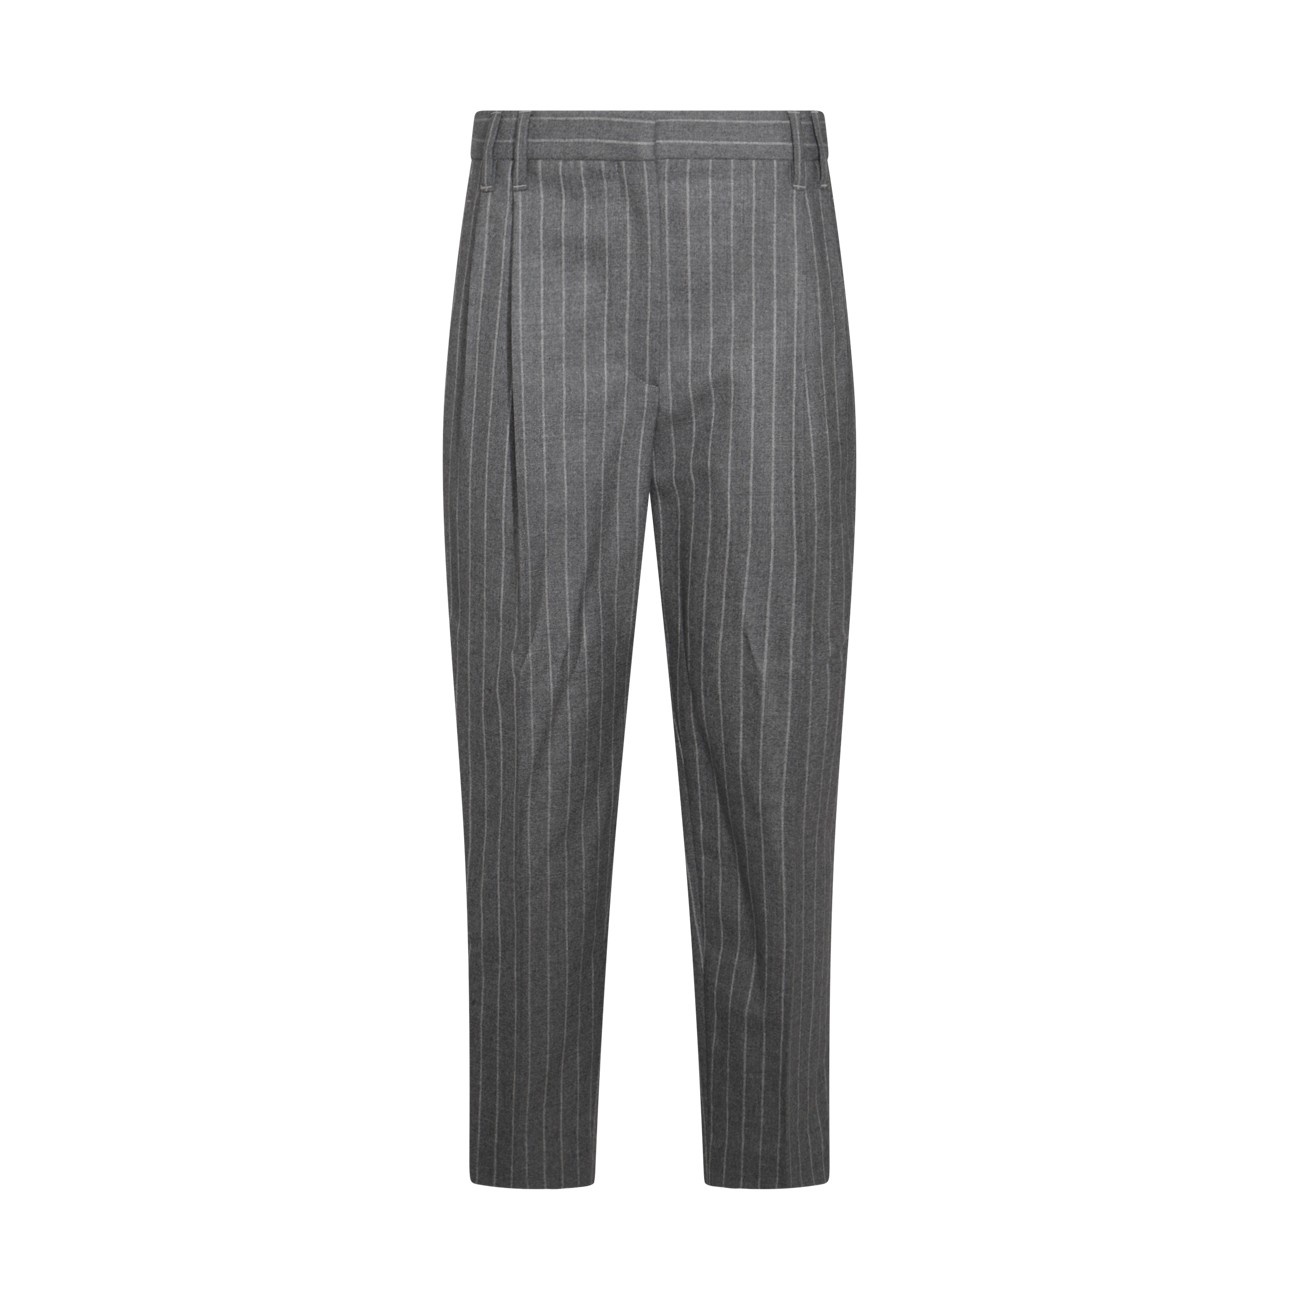 grey wool pants - 1